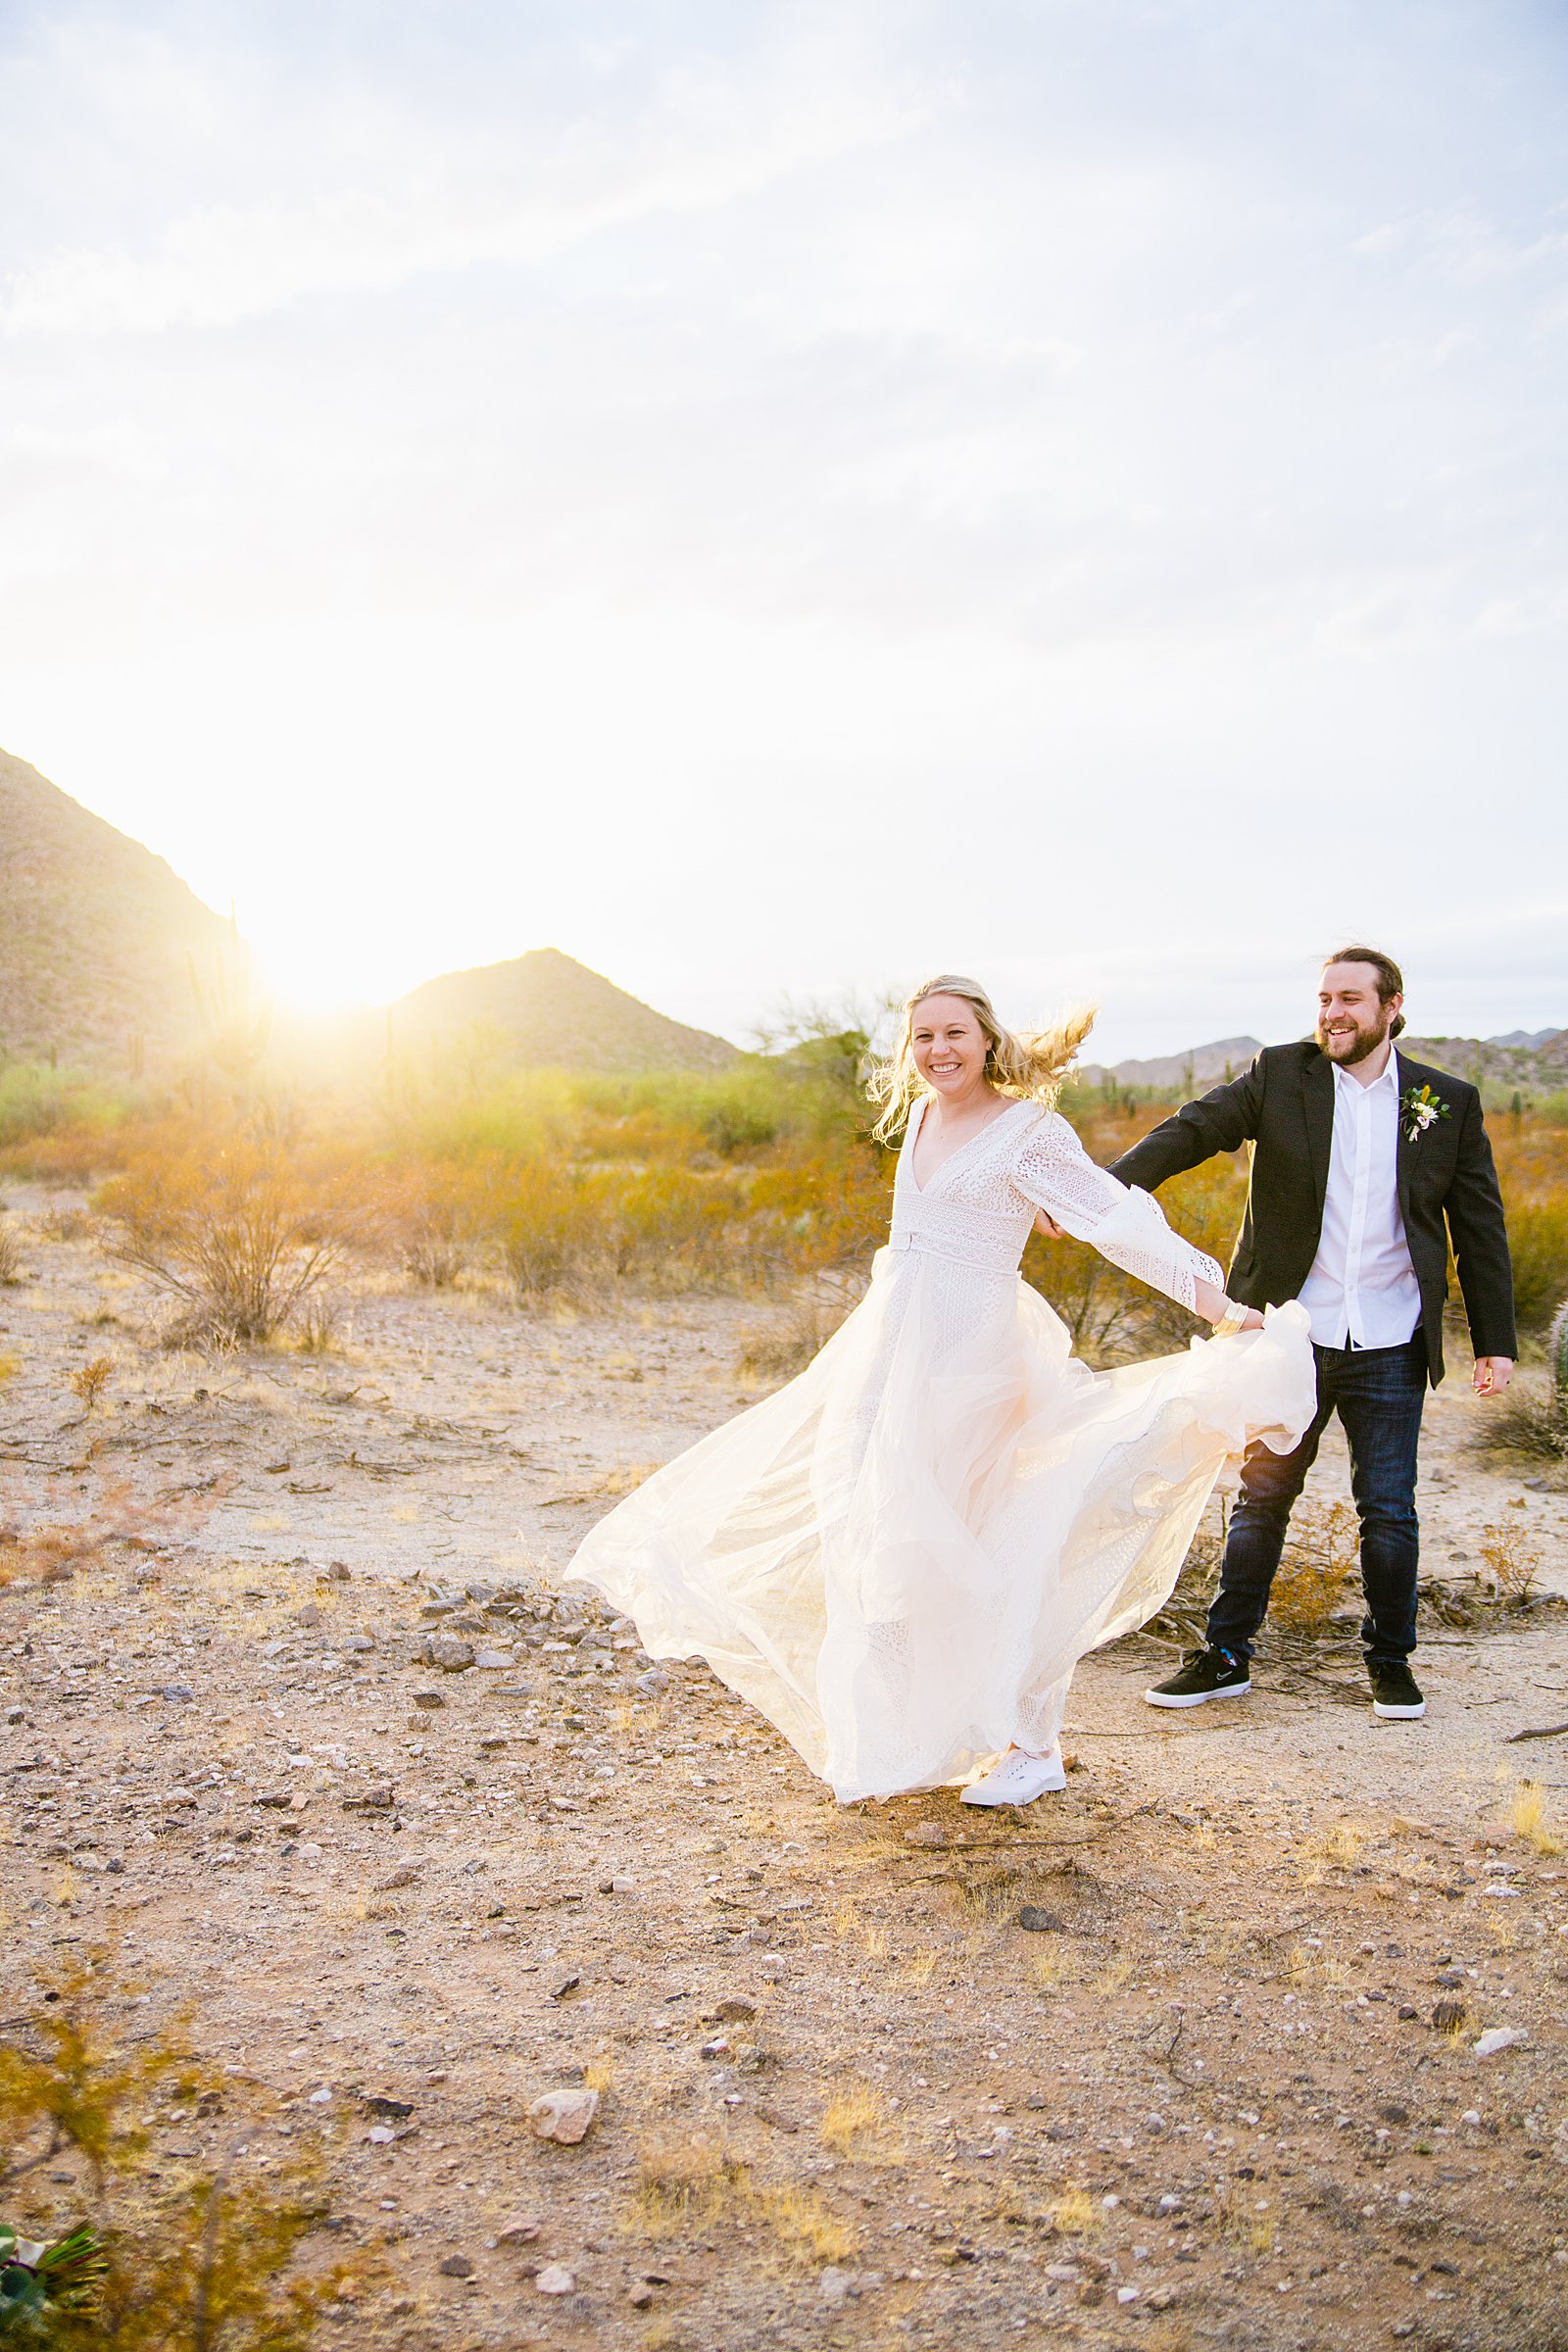 Bride and Groom dancingtogether during their San Tan Regional Park wedding by Arizona wedding photographer PMA Photography.